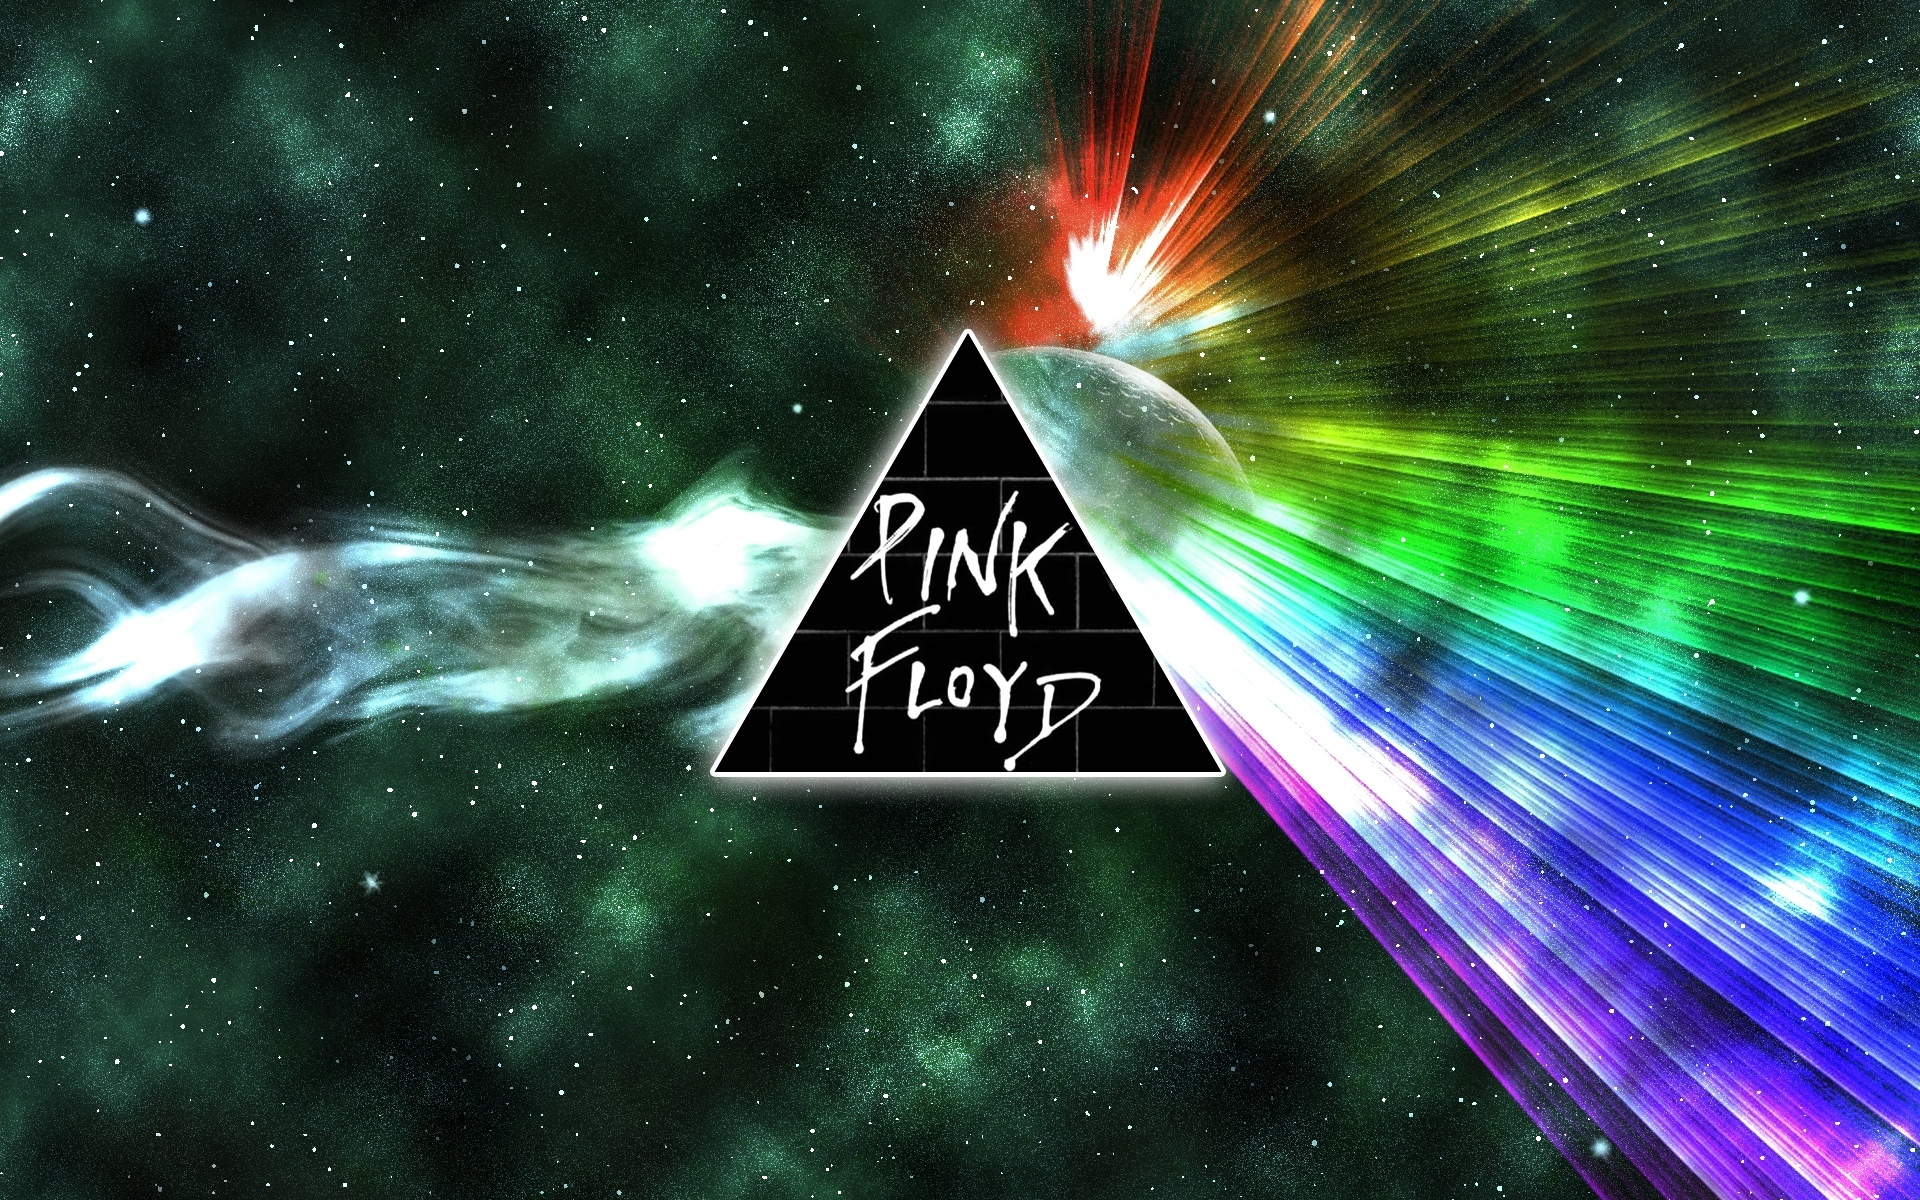 Pink Floyd - Pink Floyd Wallpaper (10566727) - Fanpop